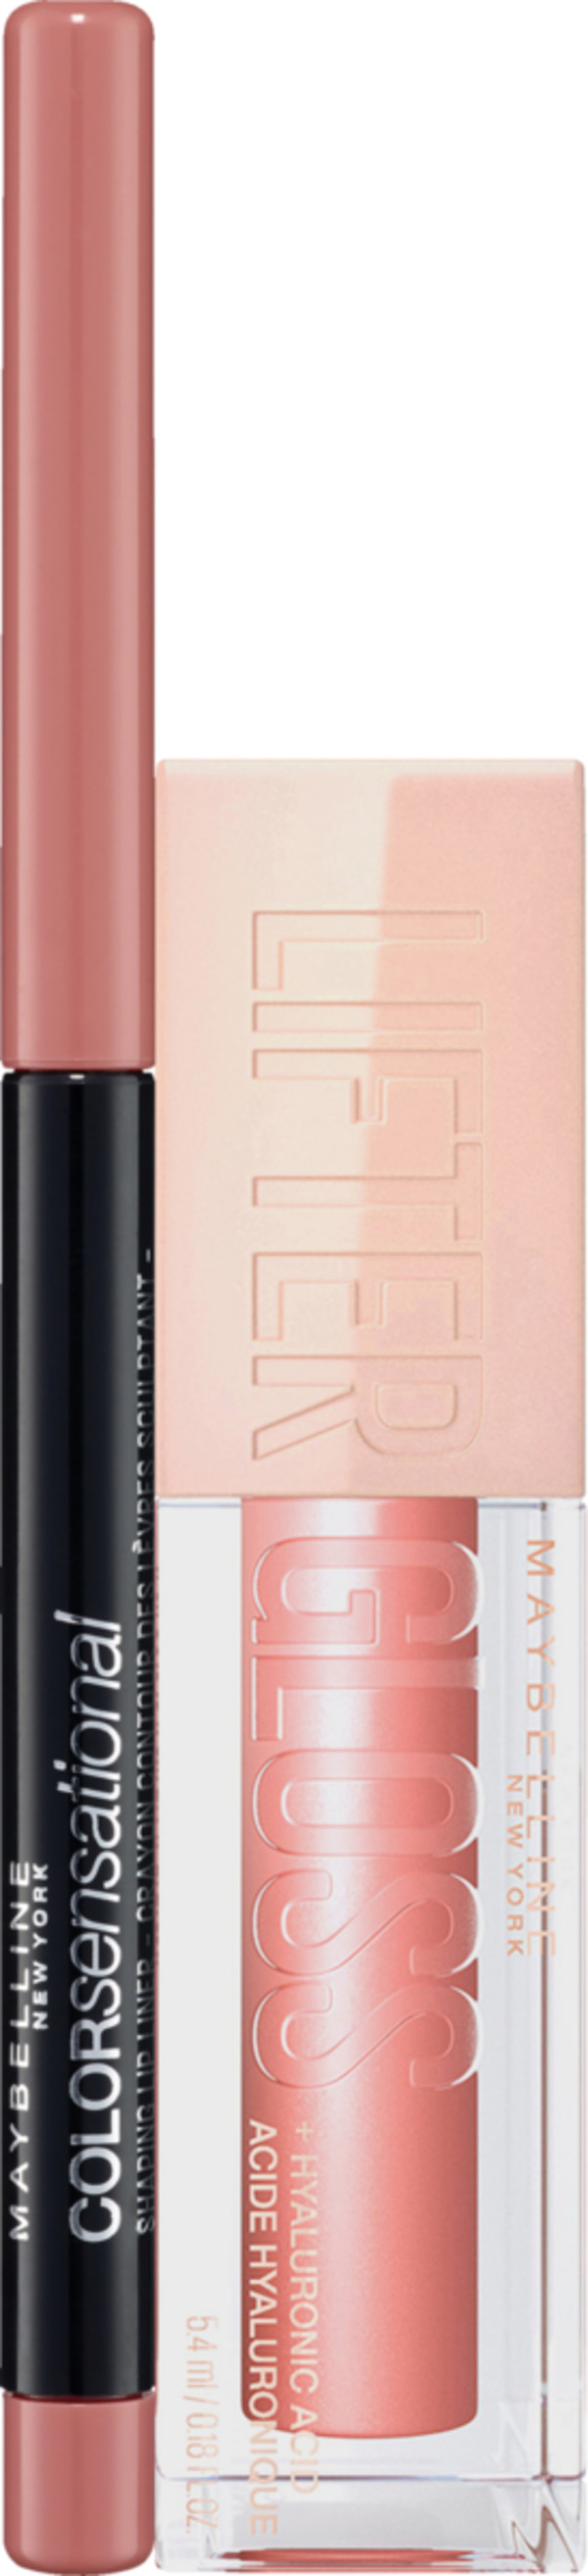 Bild 1 von Maybelline New York Make-up-Set: Lifter Gloss 04 Silk + Color Sensational ShapingLipliner 50 Dusty Rose